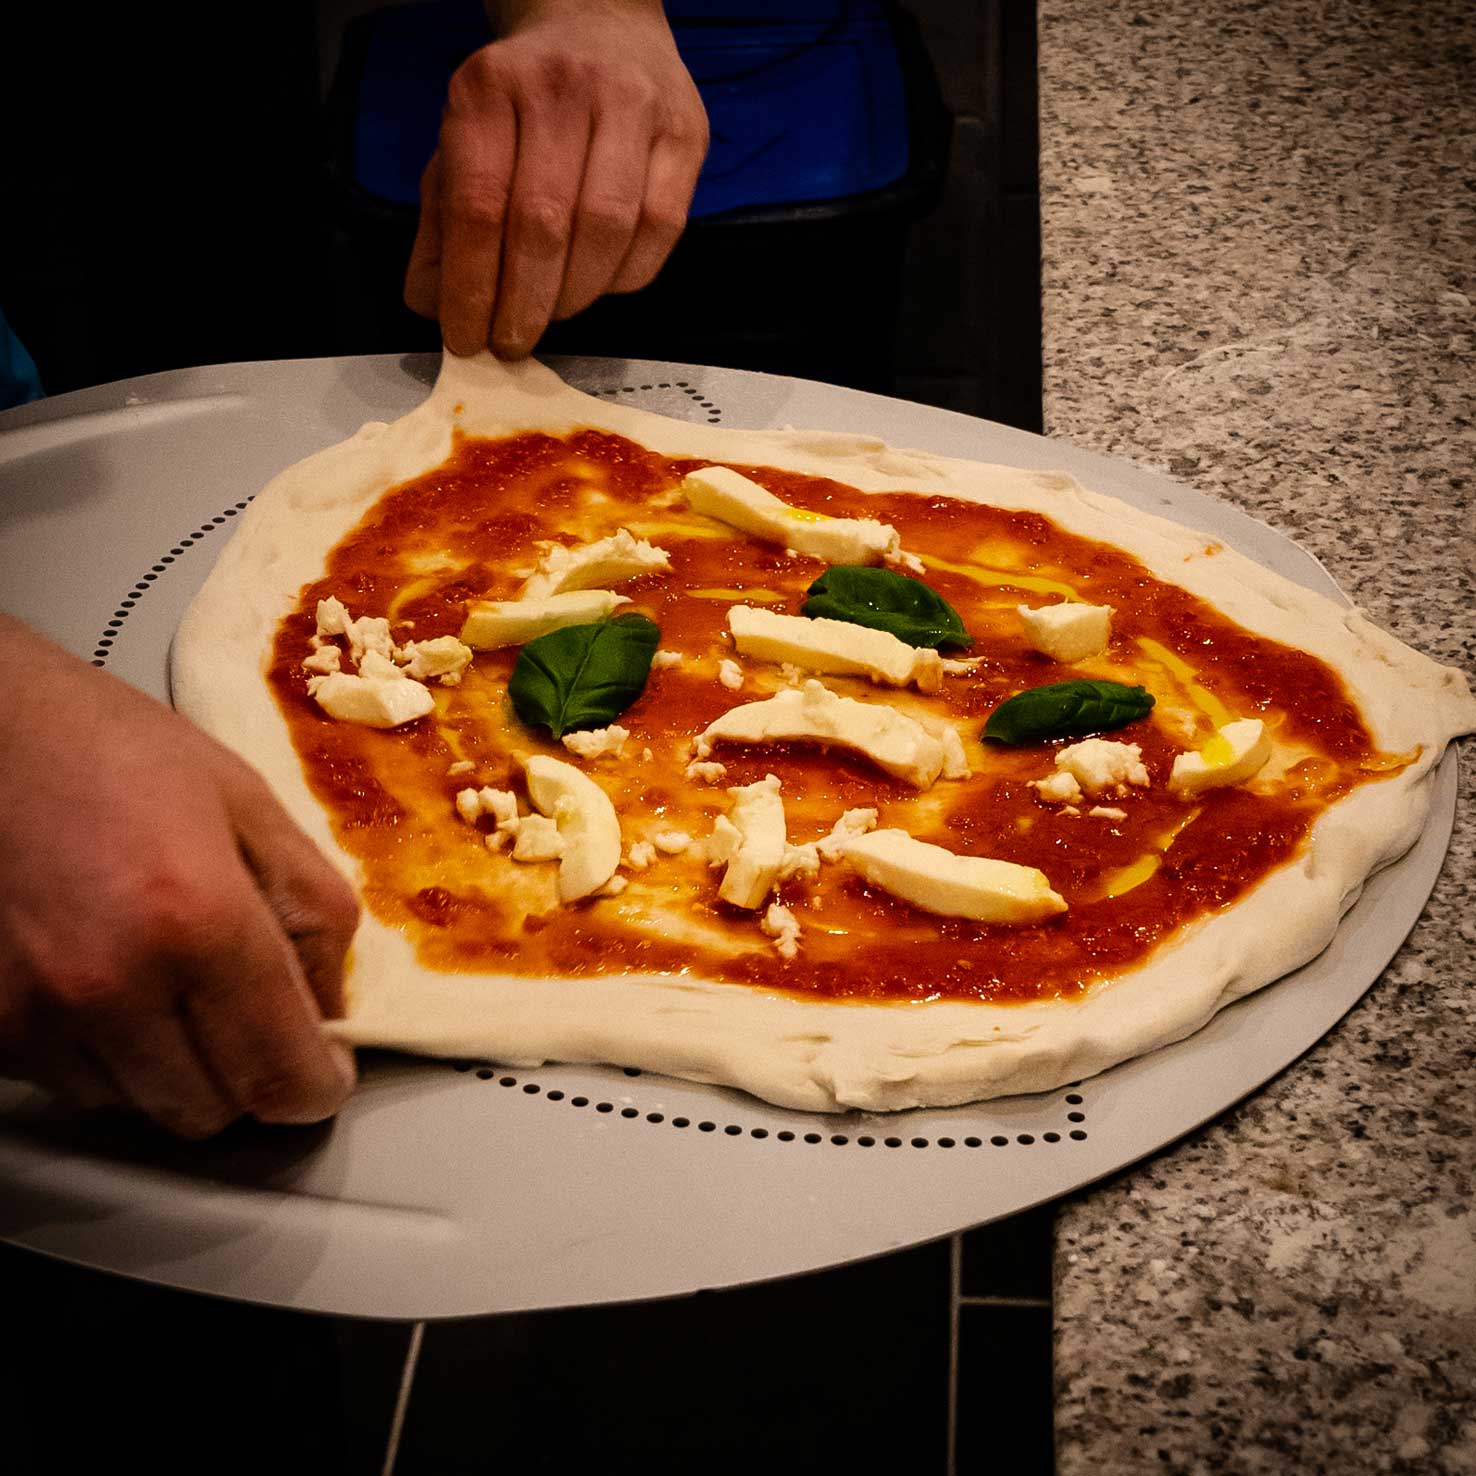 Ponticelli Pizza Napoletana